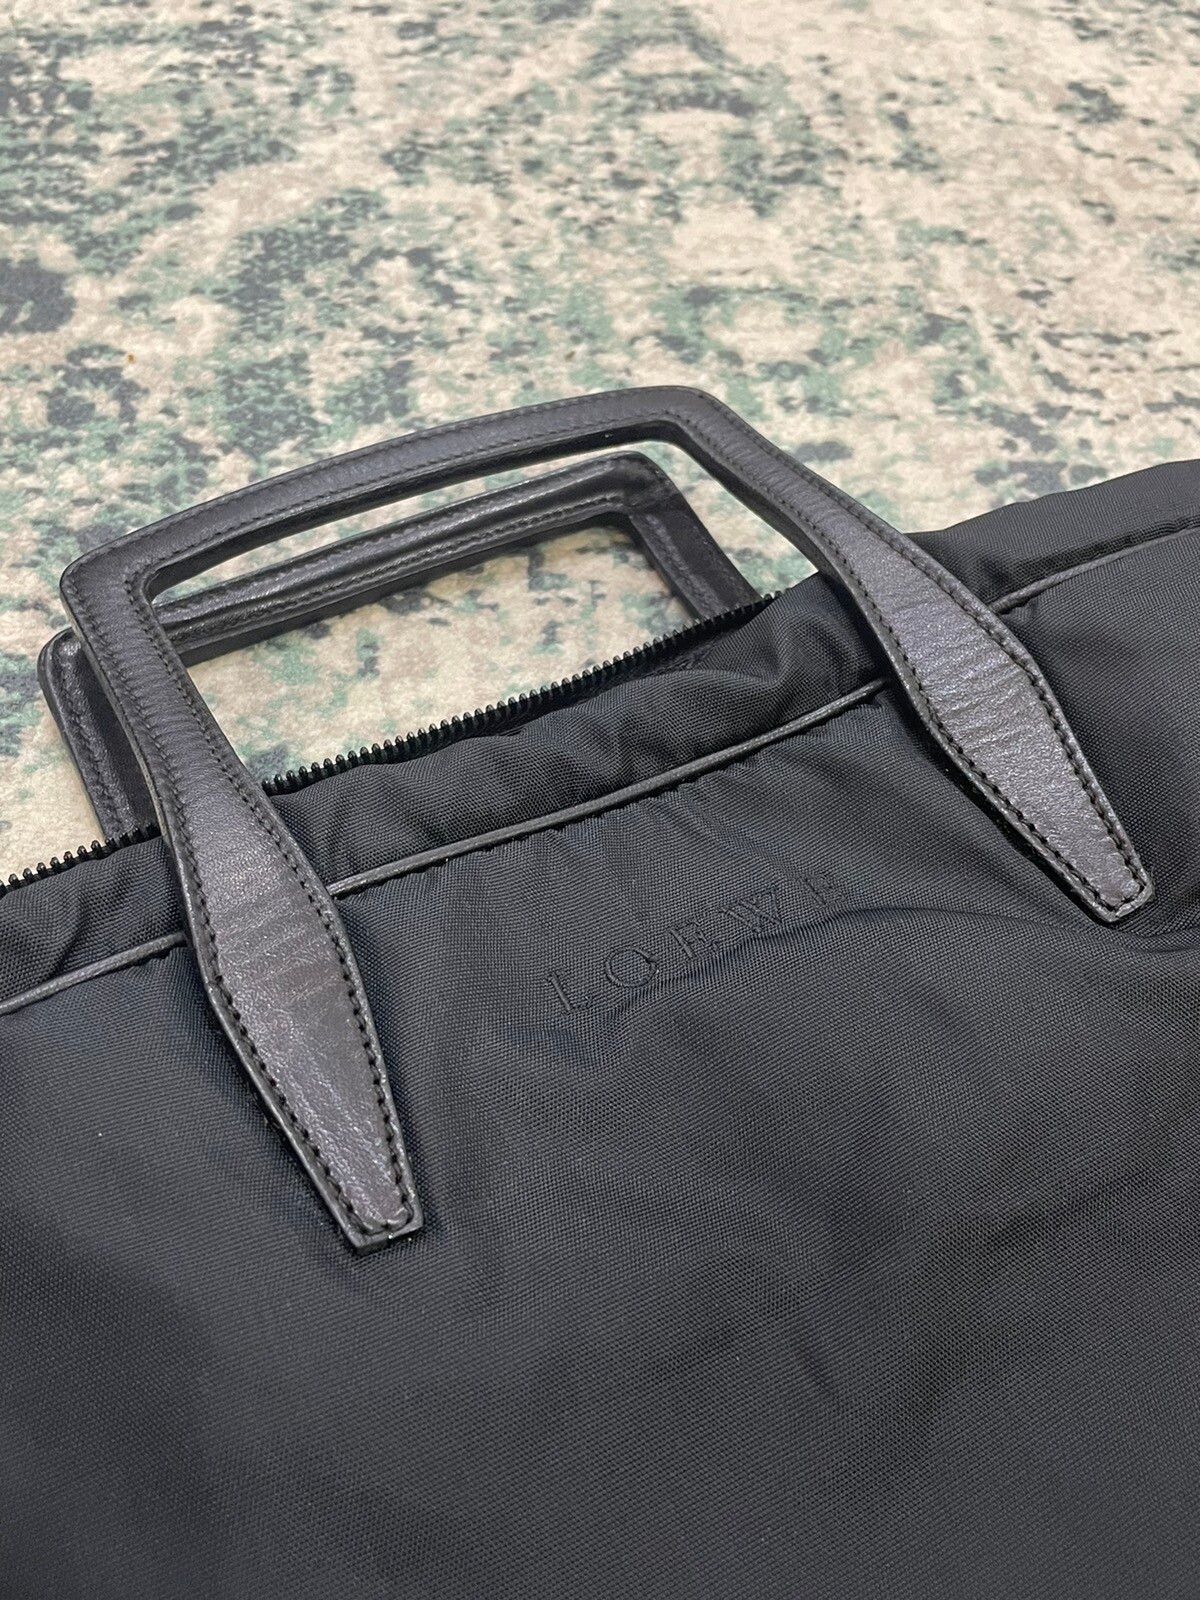 Loewe Black Nylon Leather Handle Travel Bag - 23